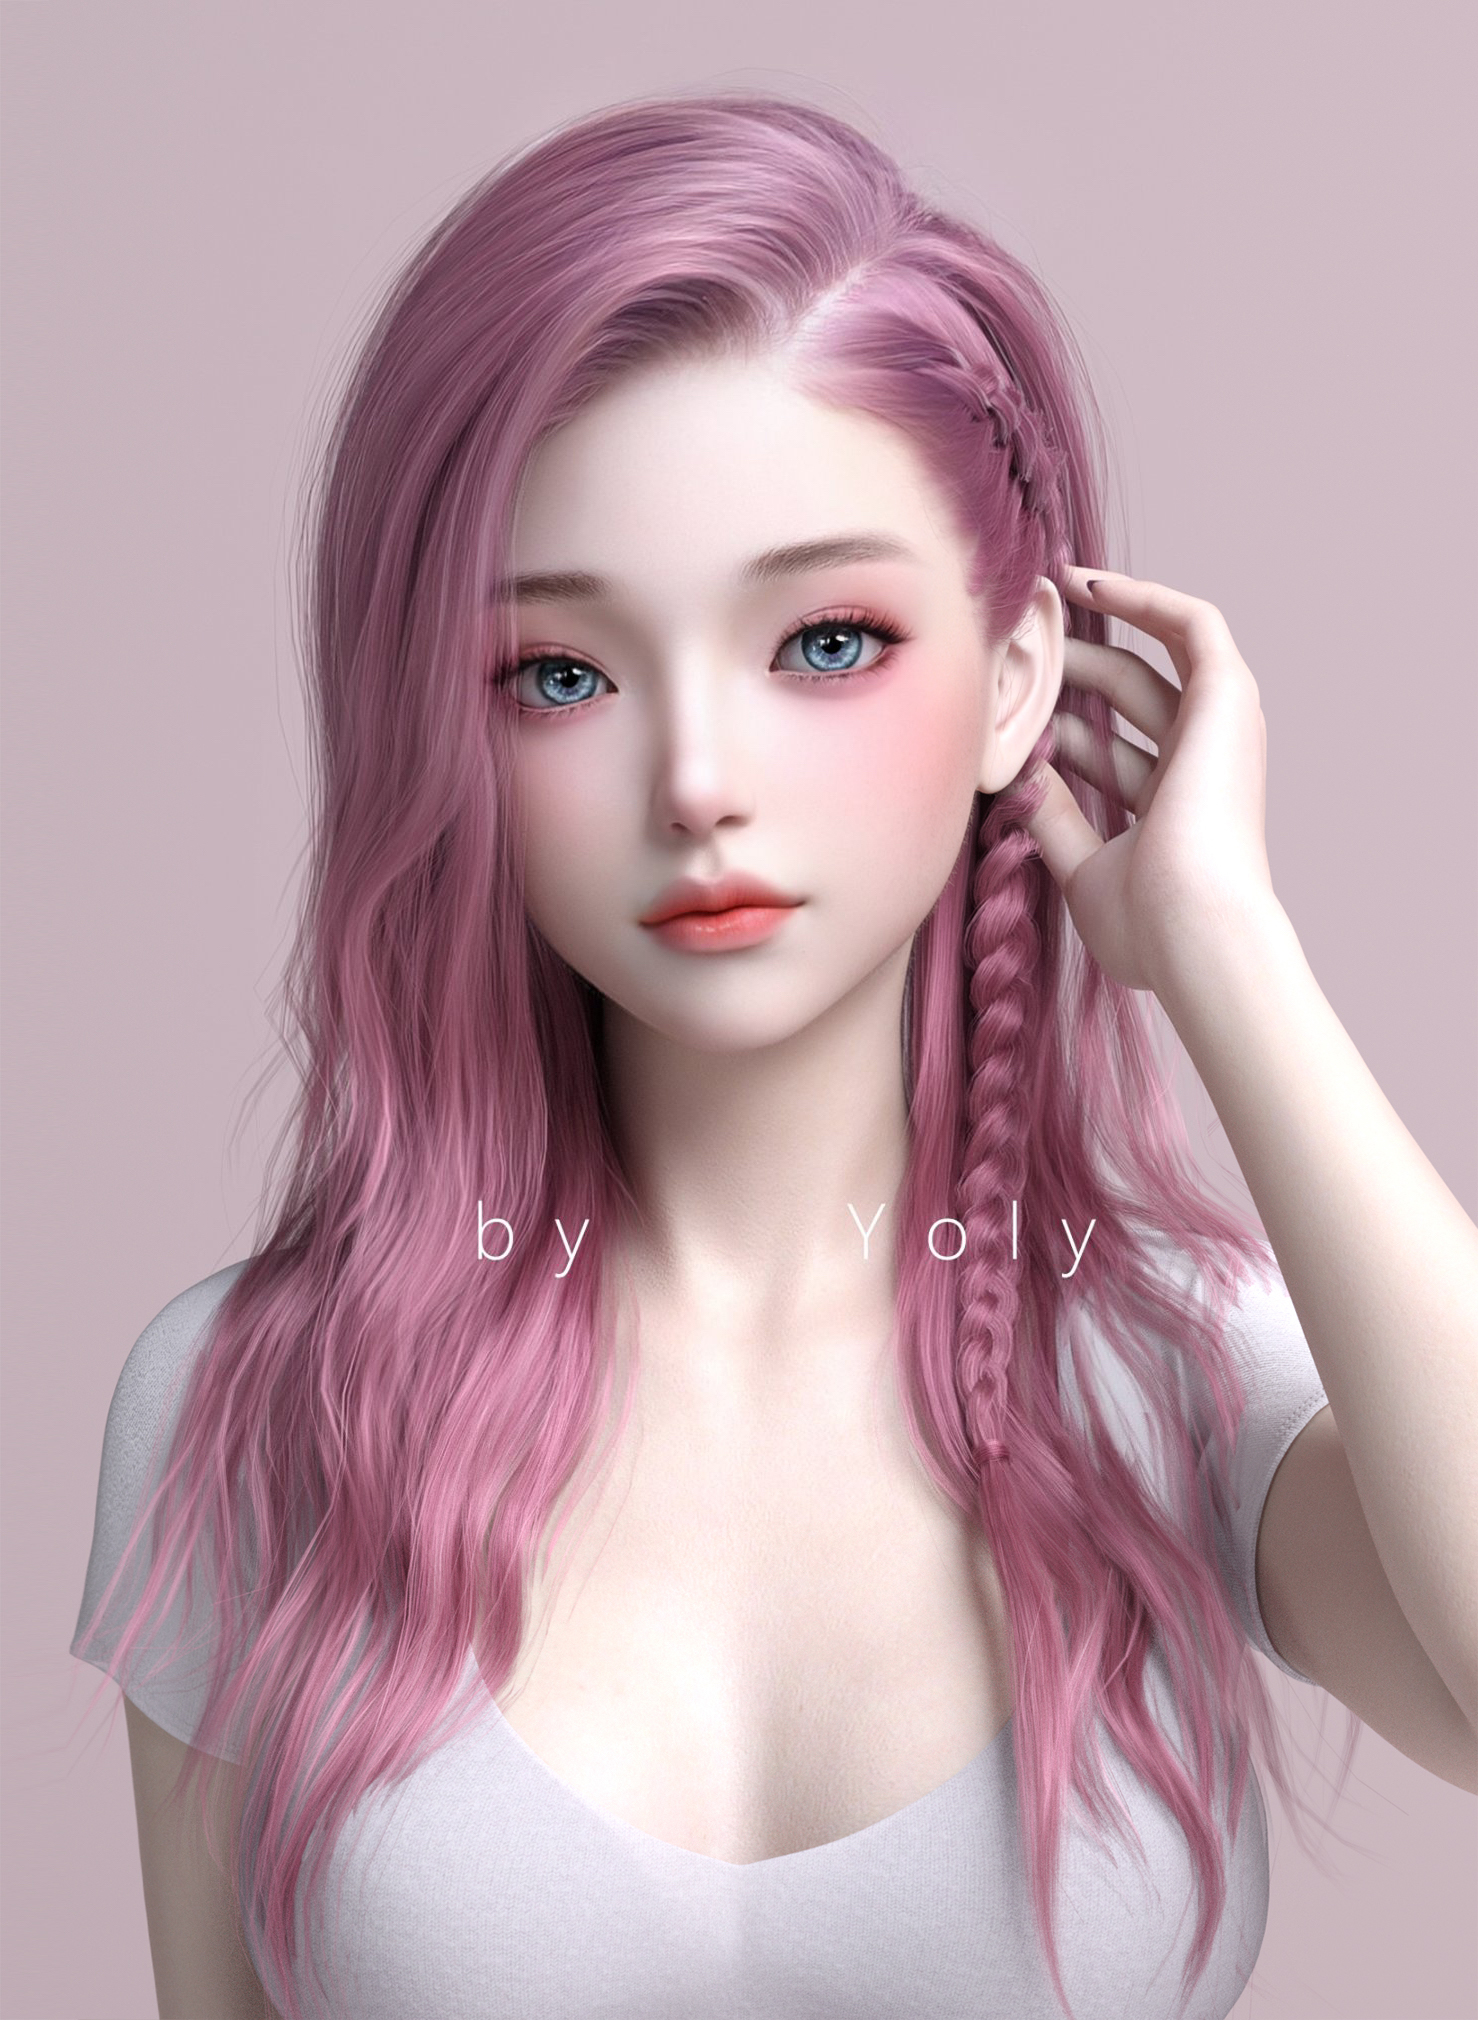 CGi Digital Art Fantasy Girl Long Hair Asian Women Women Indoors Yoly T Shirt Braids 1478x2020